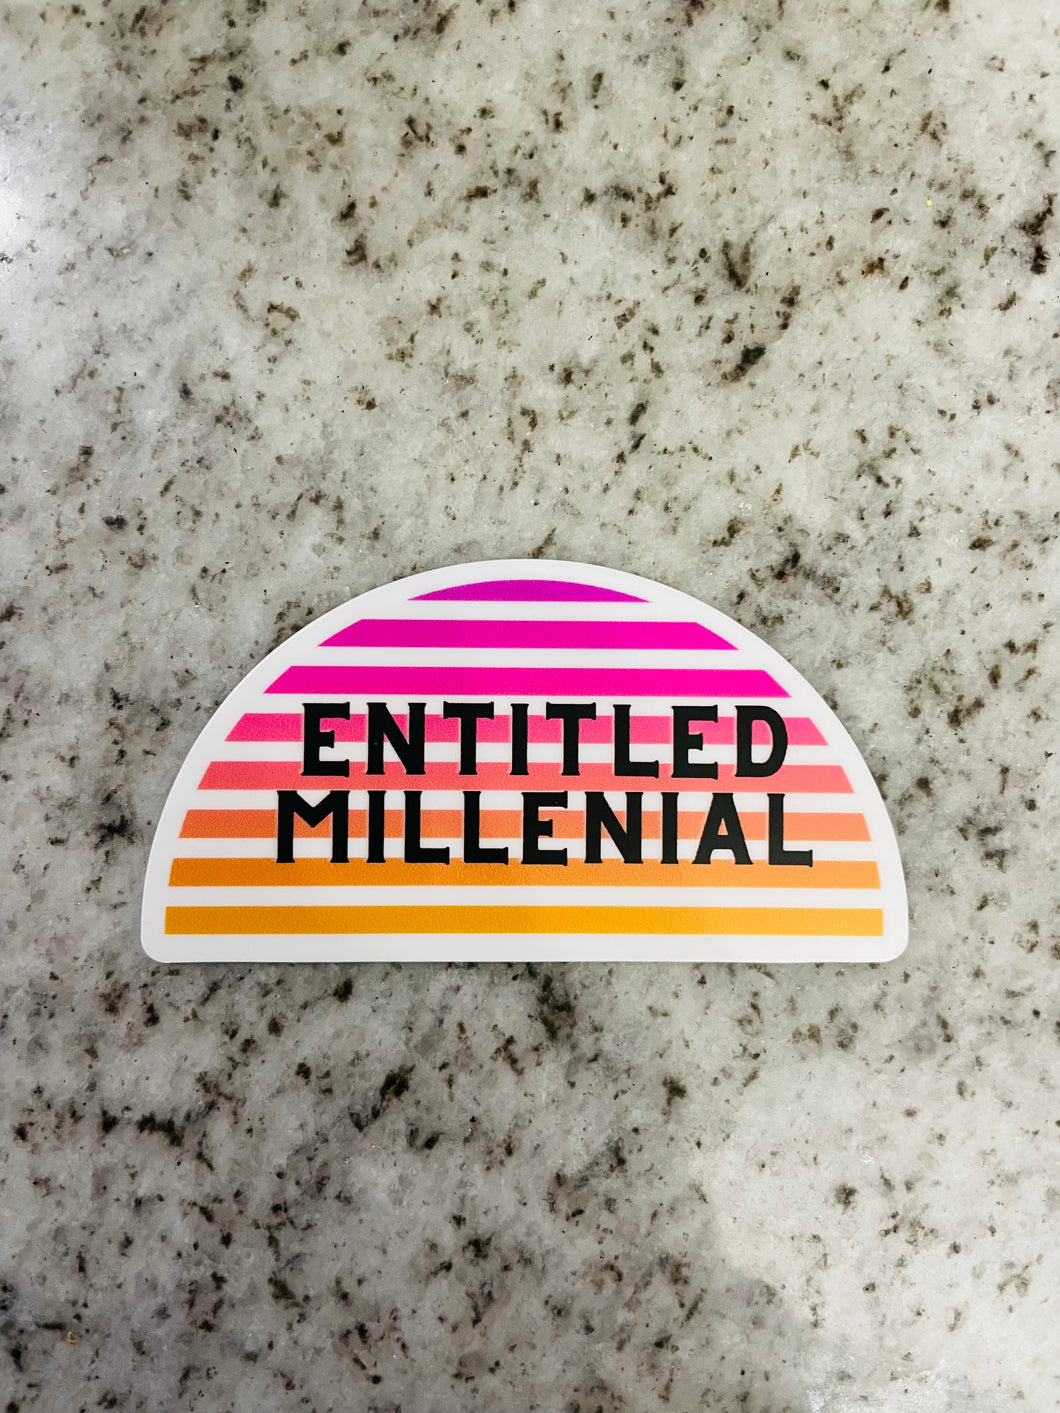 Entitled Millenial sticker